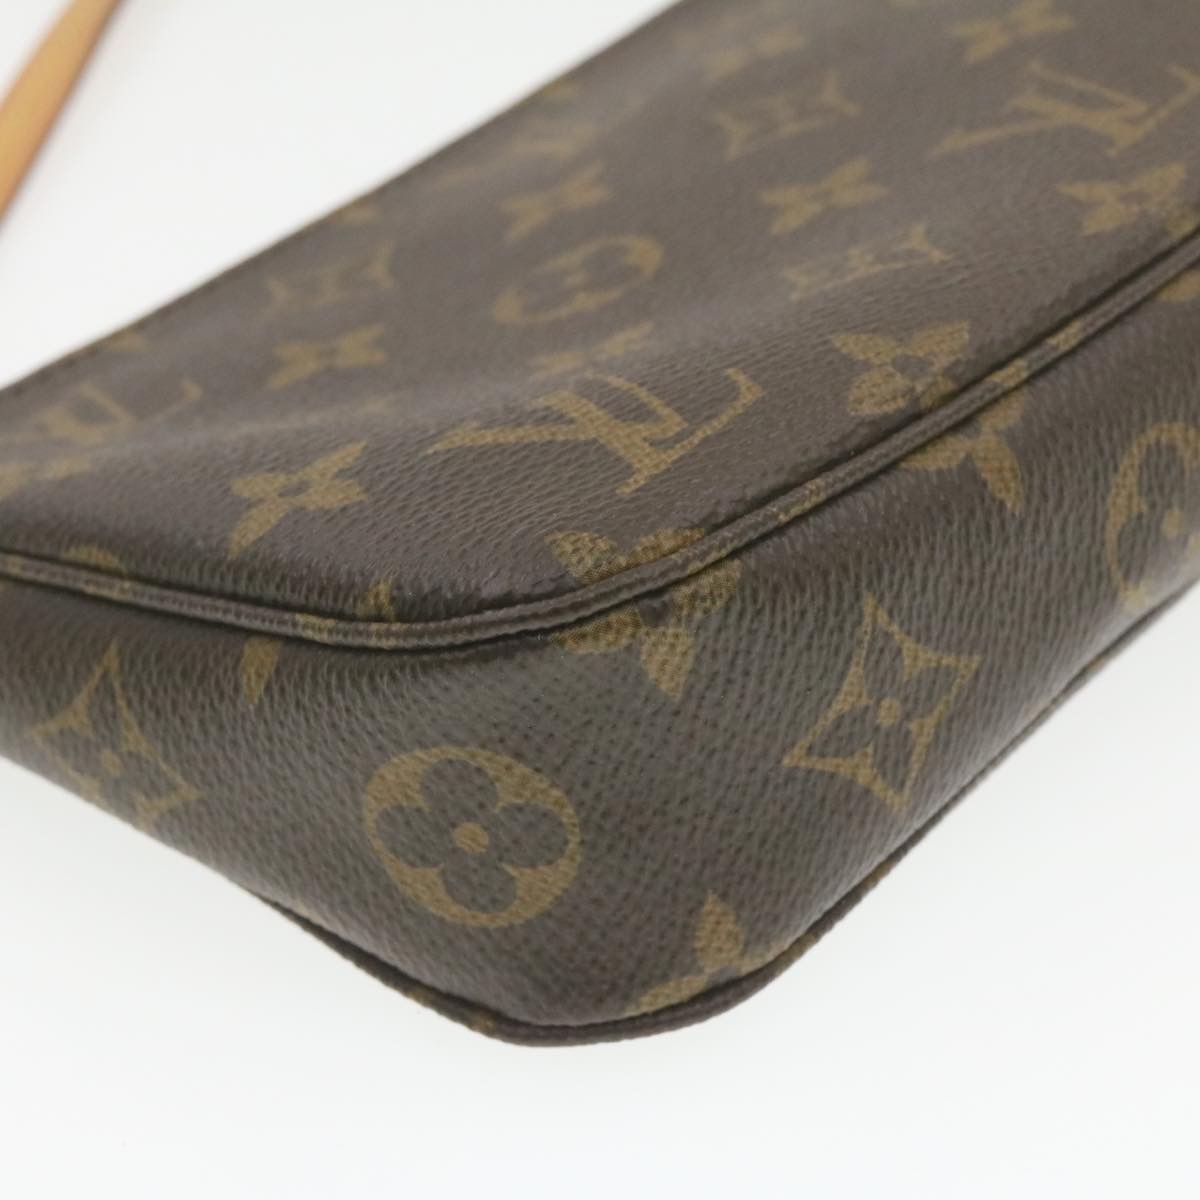 Pochette Accessoires Monogram in Brown - Handbags M40712